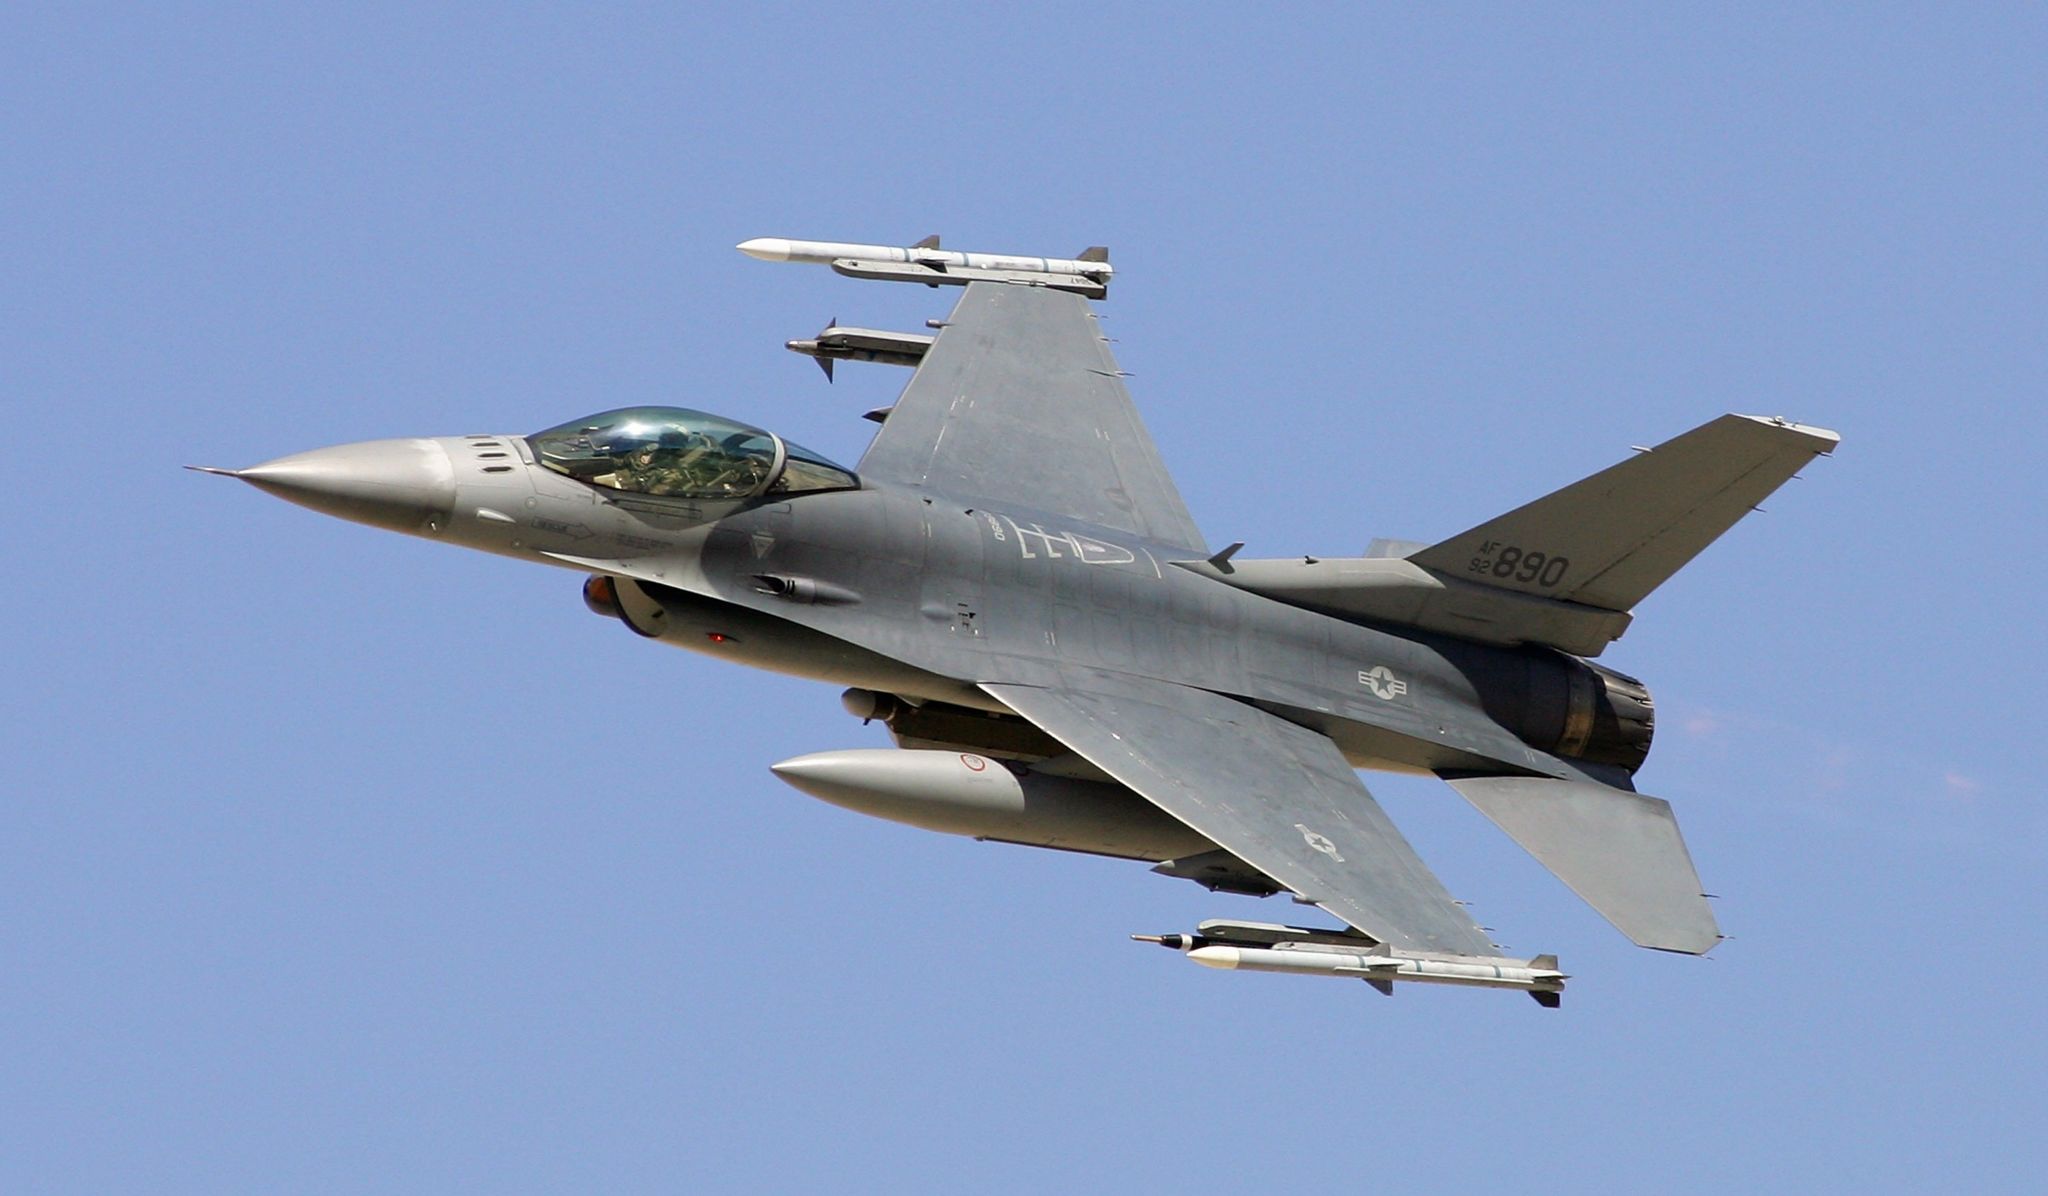 F-16 during demo at Nevada test range